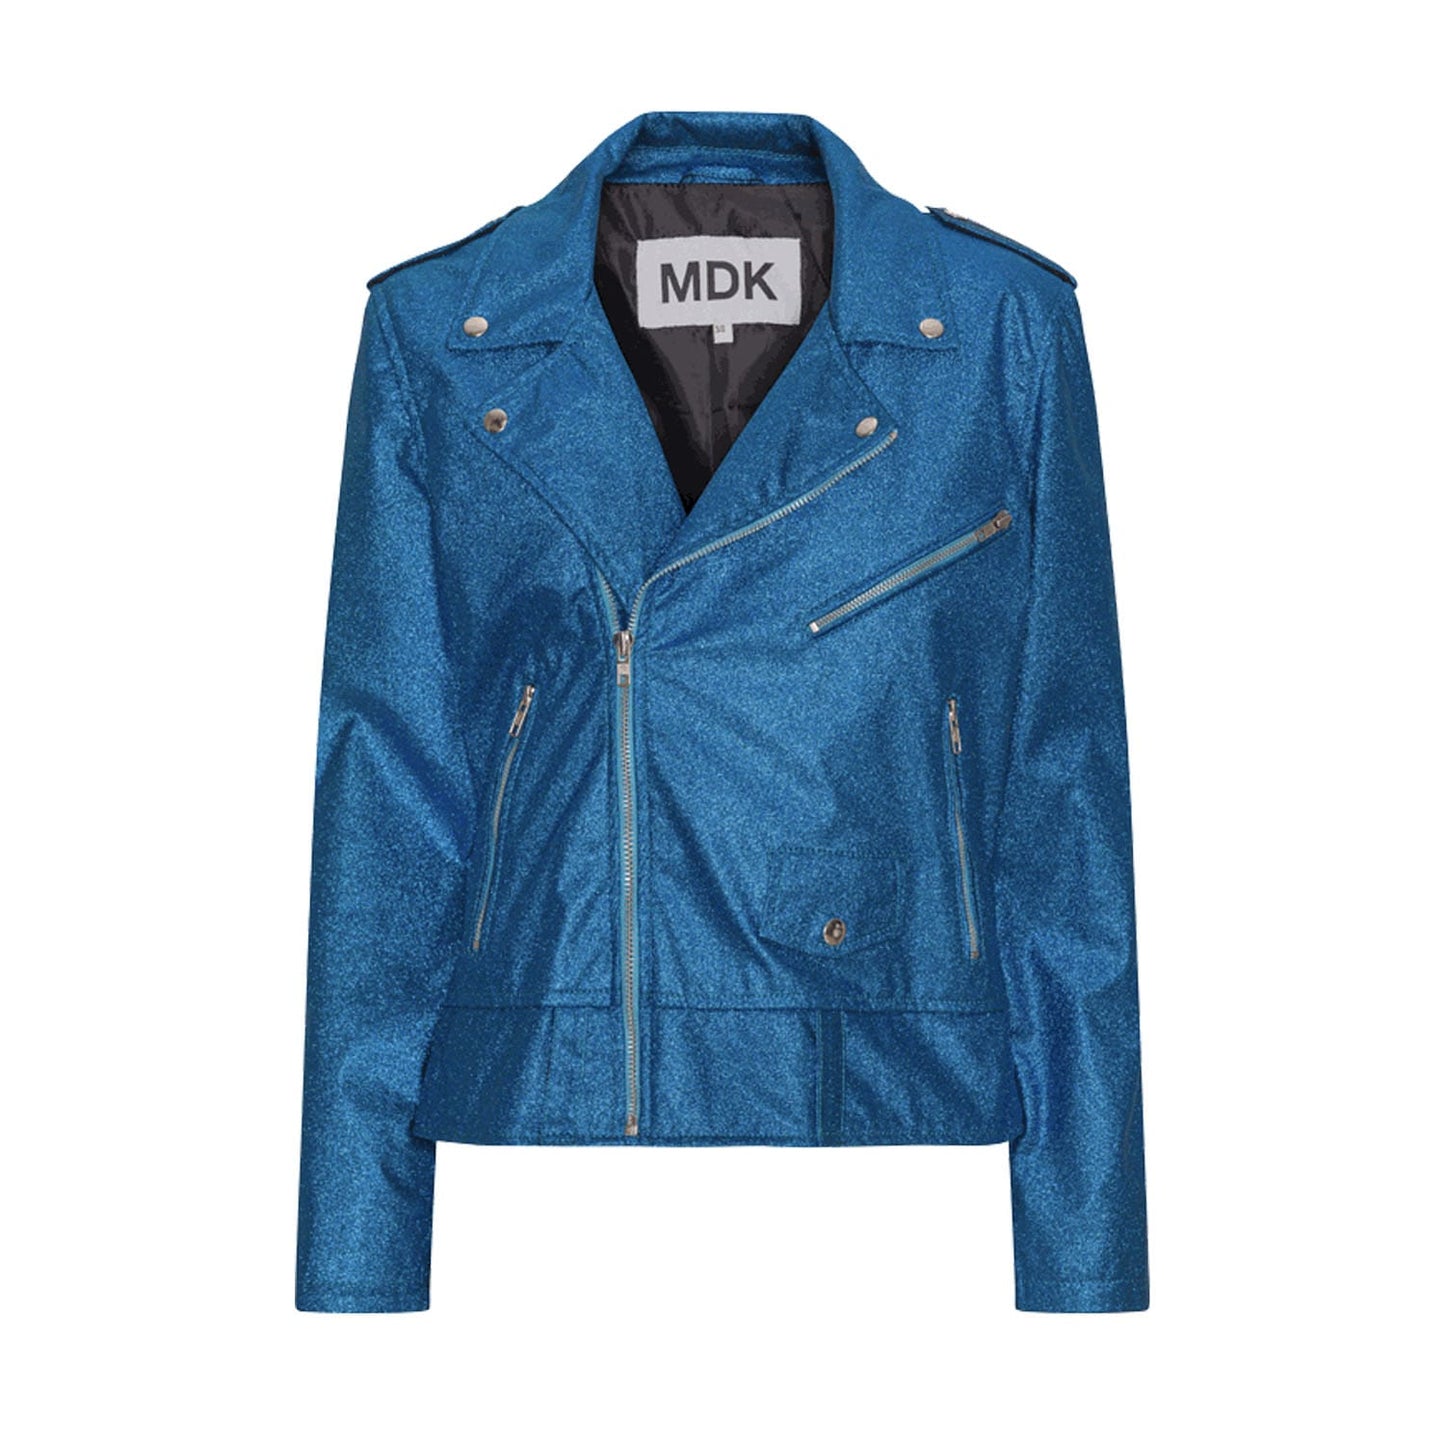 MDK-7704 Pi PU jacket